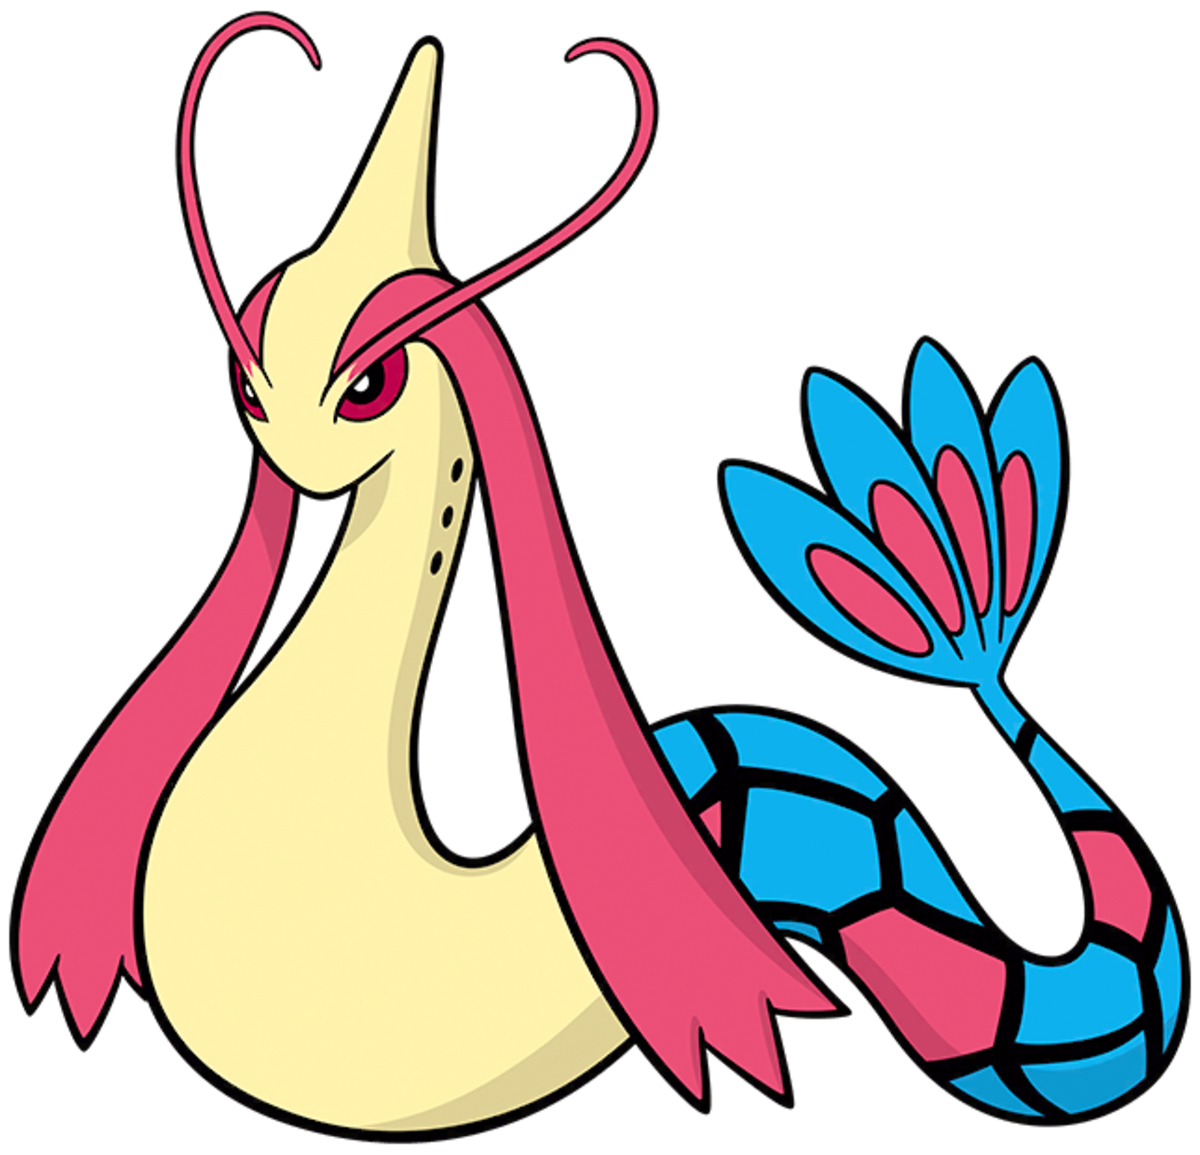 Milotic, the "Tender" Pokémon 